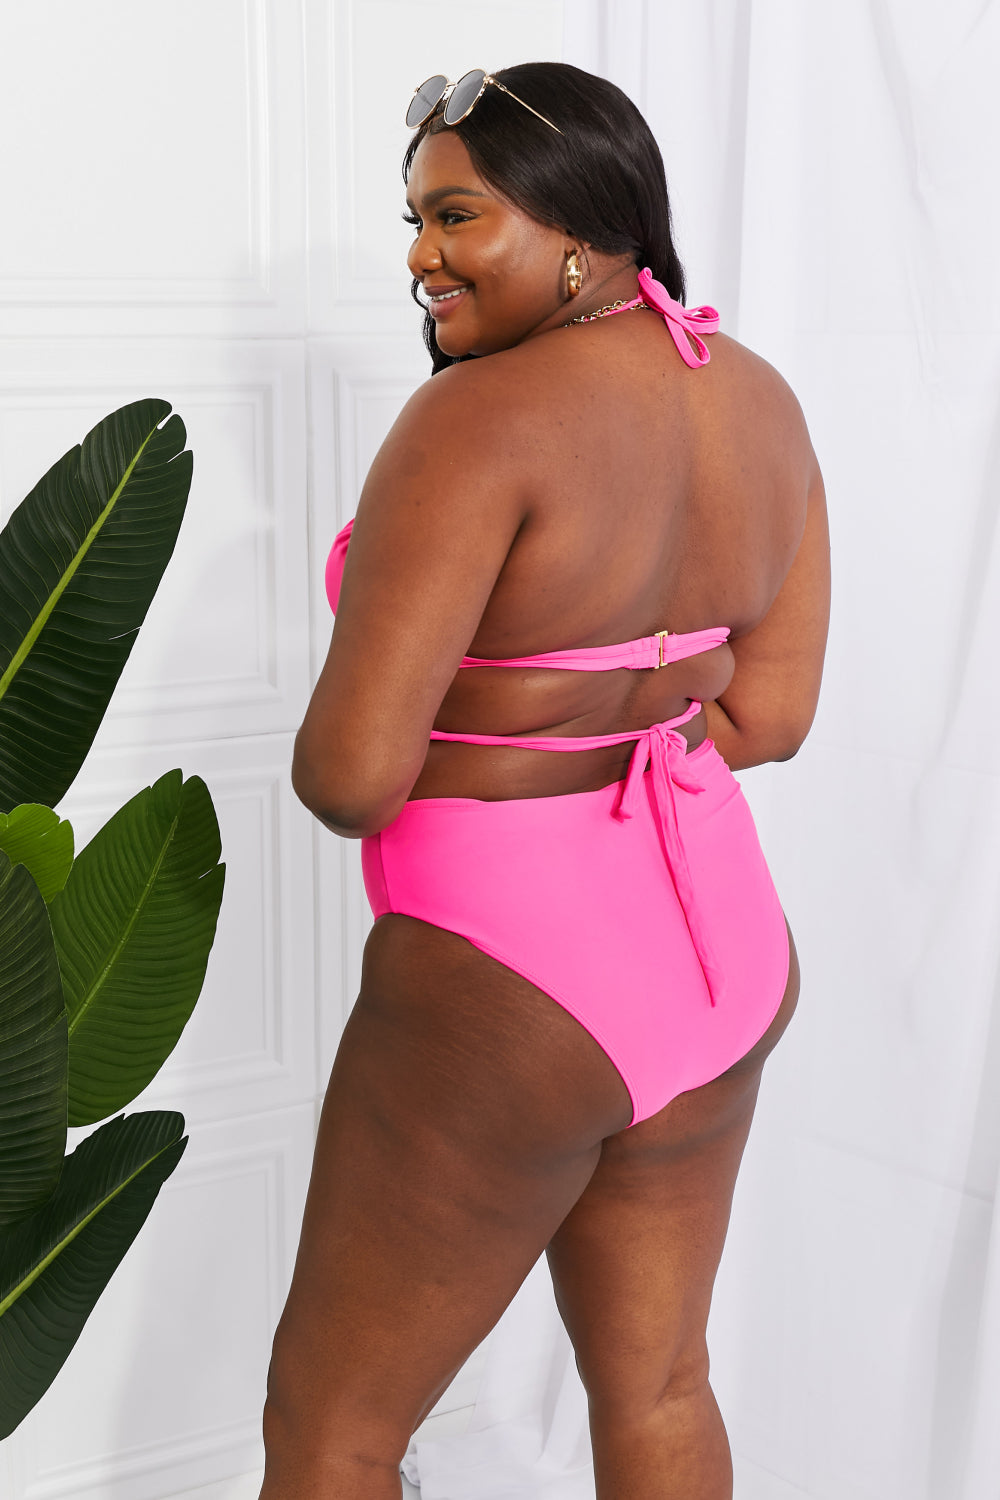 Marina West Swim Summer Splash Halter Bikini Set in Pink - Sun of the Beach Boutique